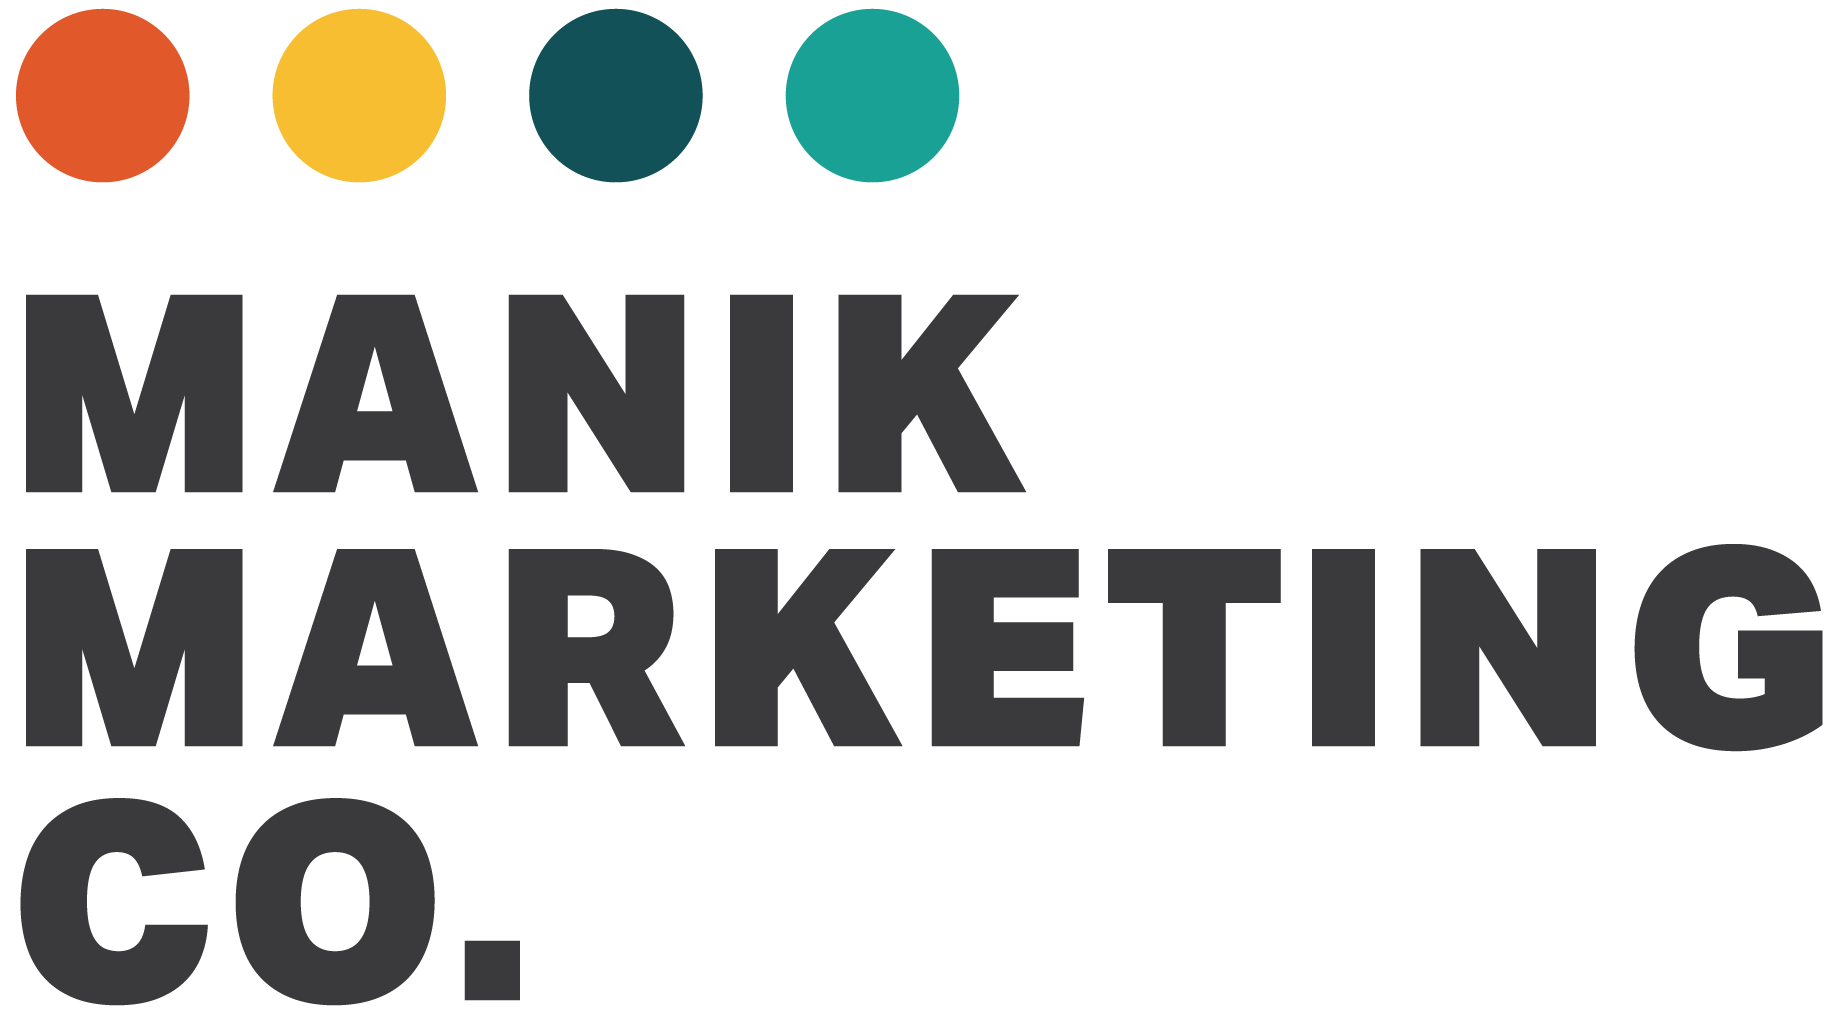 Manik Marketing Co. - Website, Marketing, Lead Generation